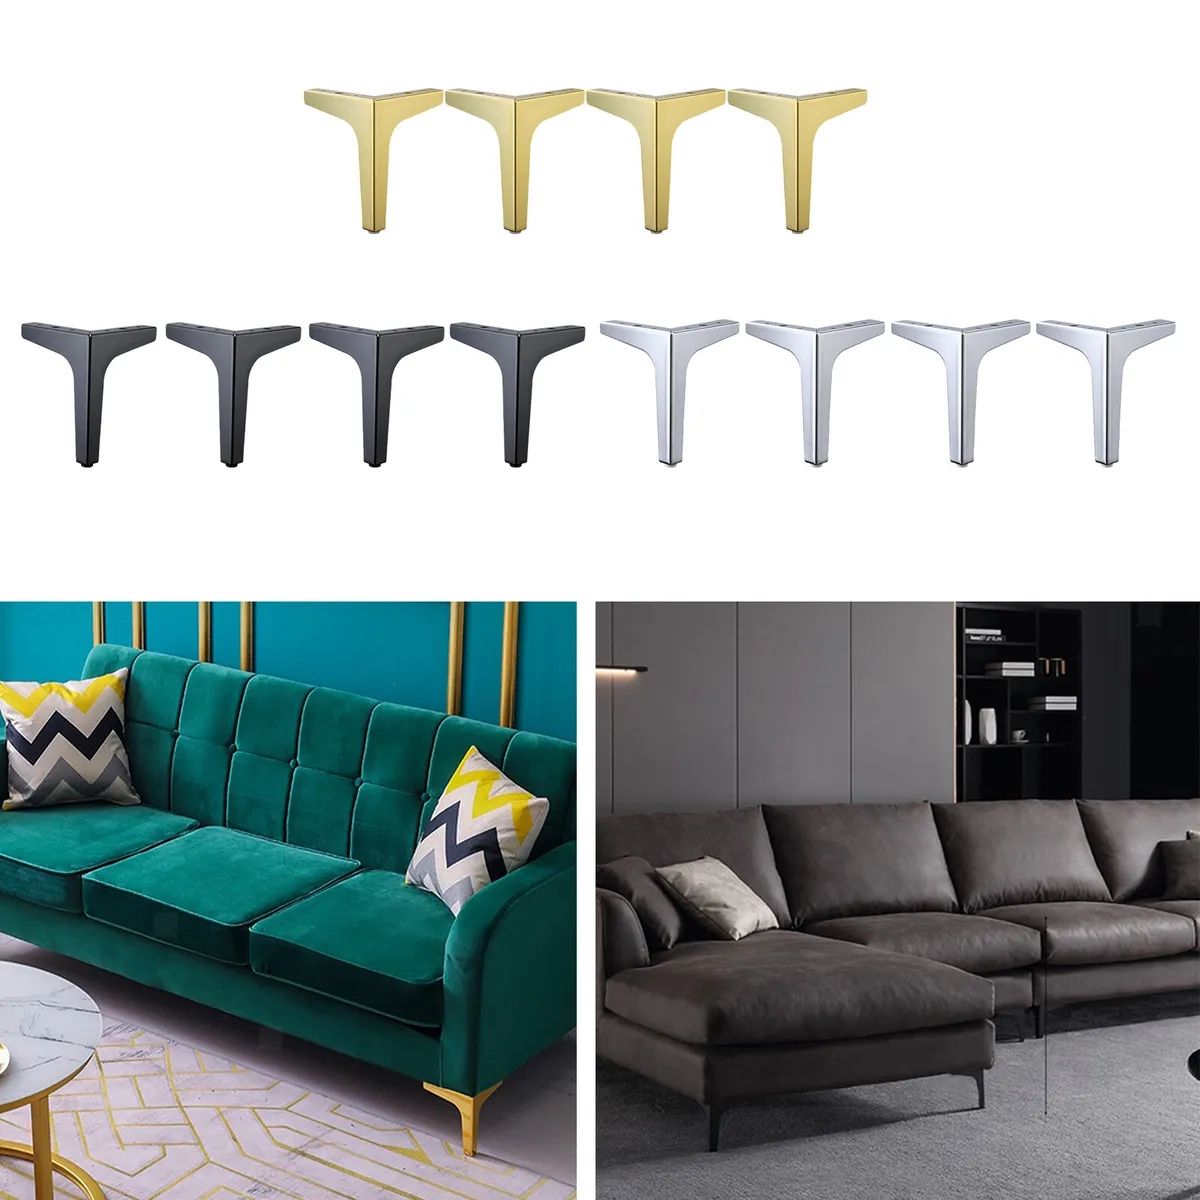 Metal Furniture Legs Sofa Loveseat Chair Sectional – Set Of 4 Black/Gold/ Chrome | Ebay Within Chrome Metal Legs Sofas (Photo 10 of 15)